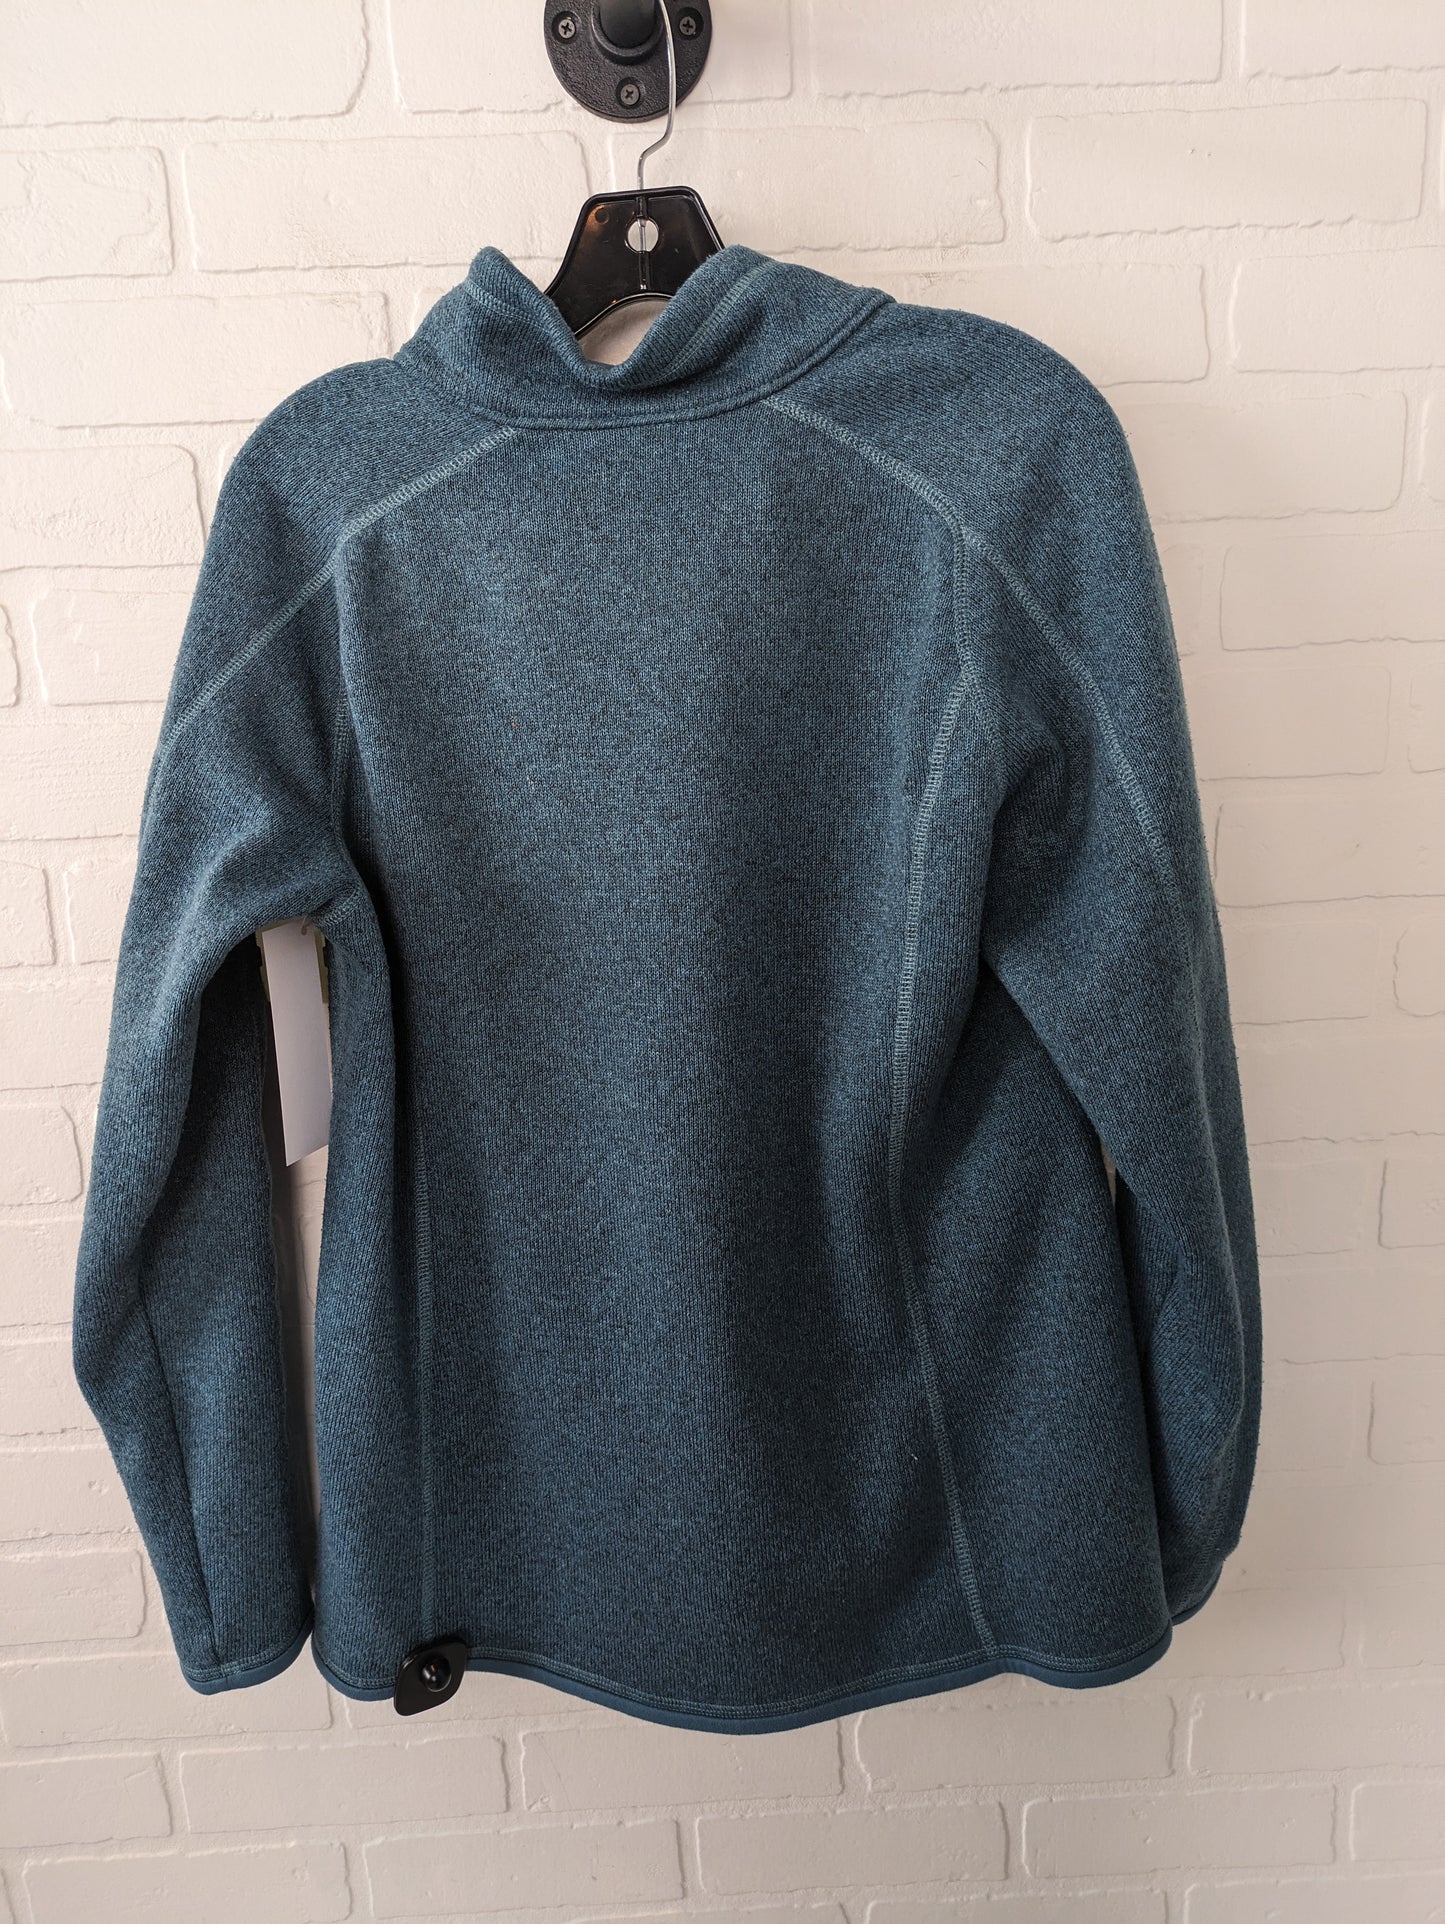 Jacket Fleece By Patagonia  Size: Xl